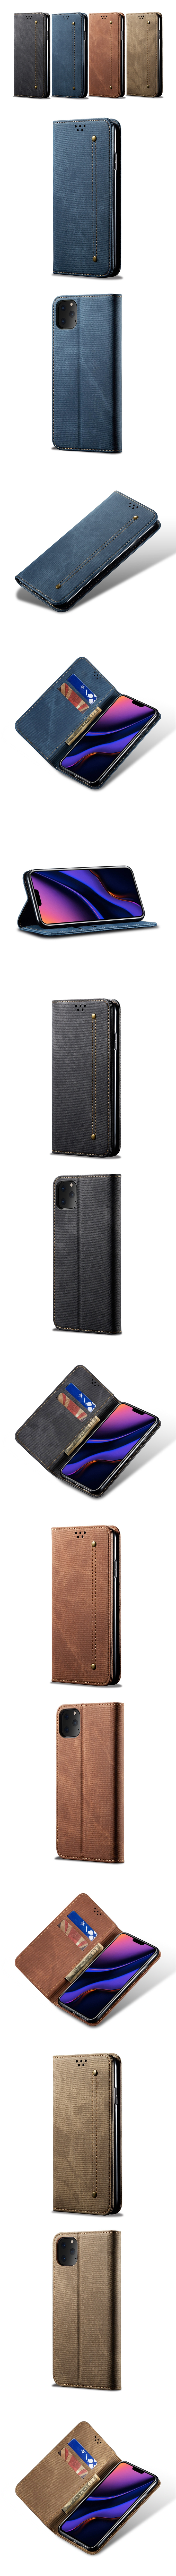 349-IPhone-皮革仿牛仔布紋微磁吸皮套保護套手機套(IPhone XS Max)